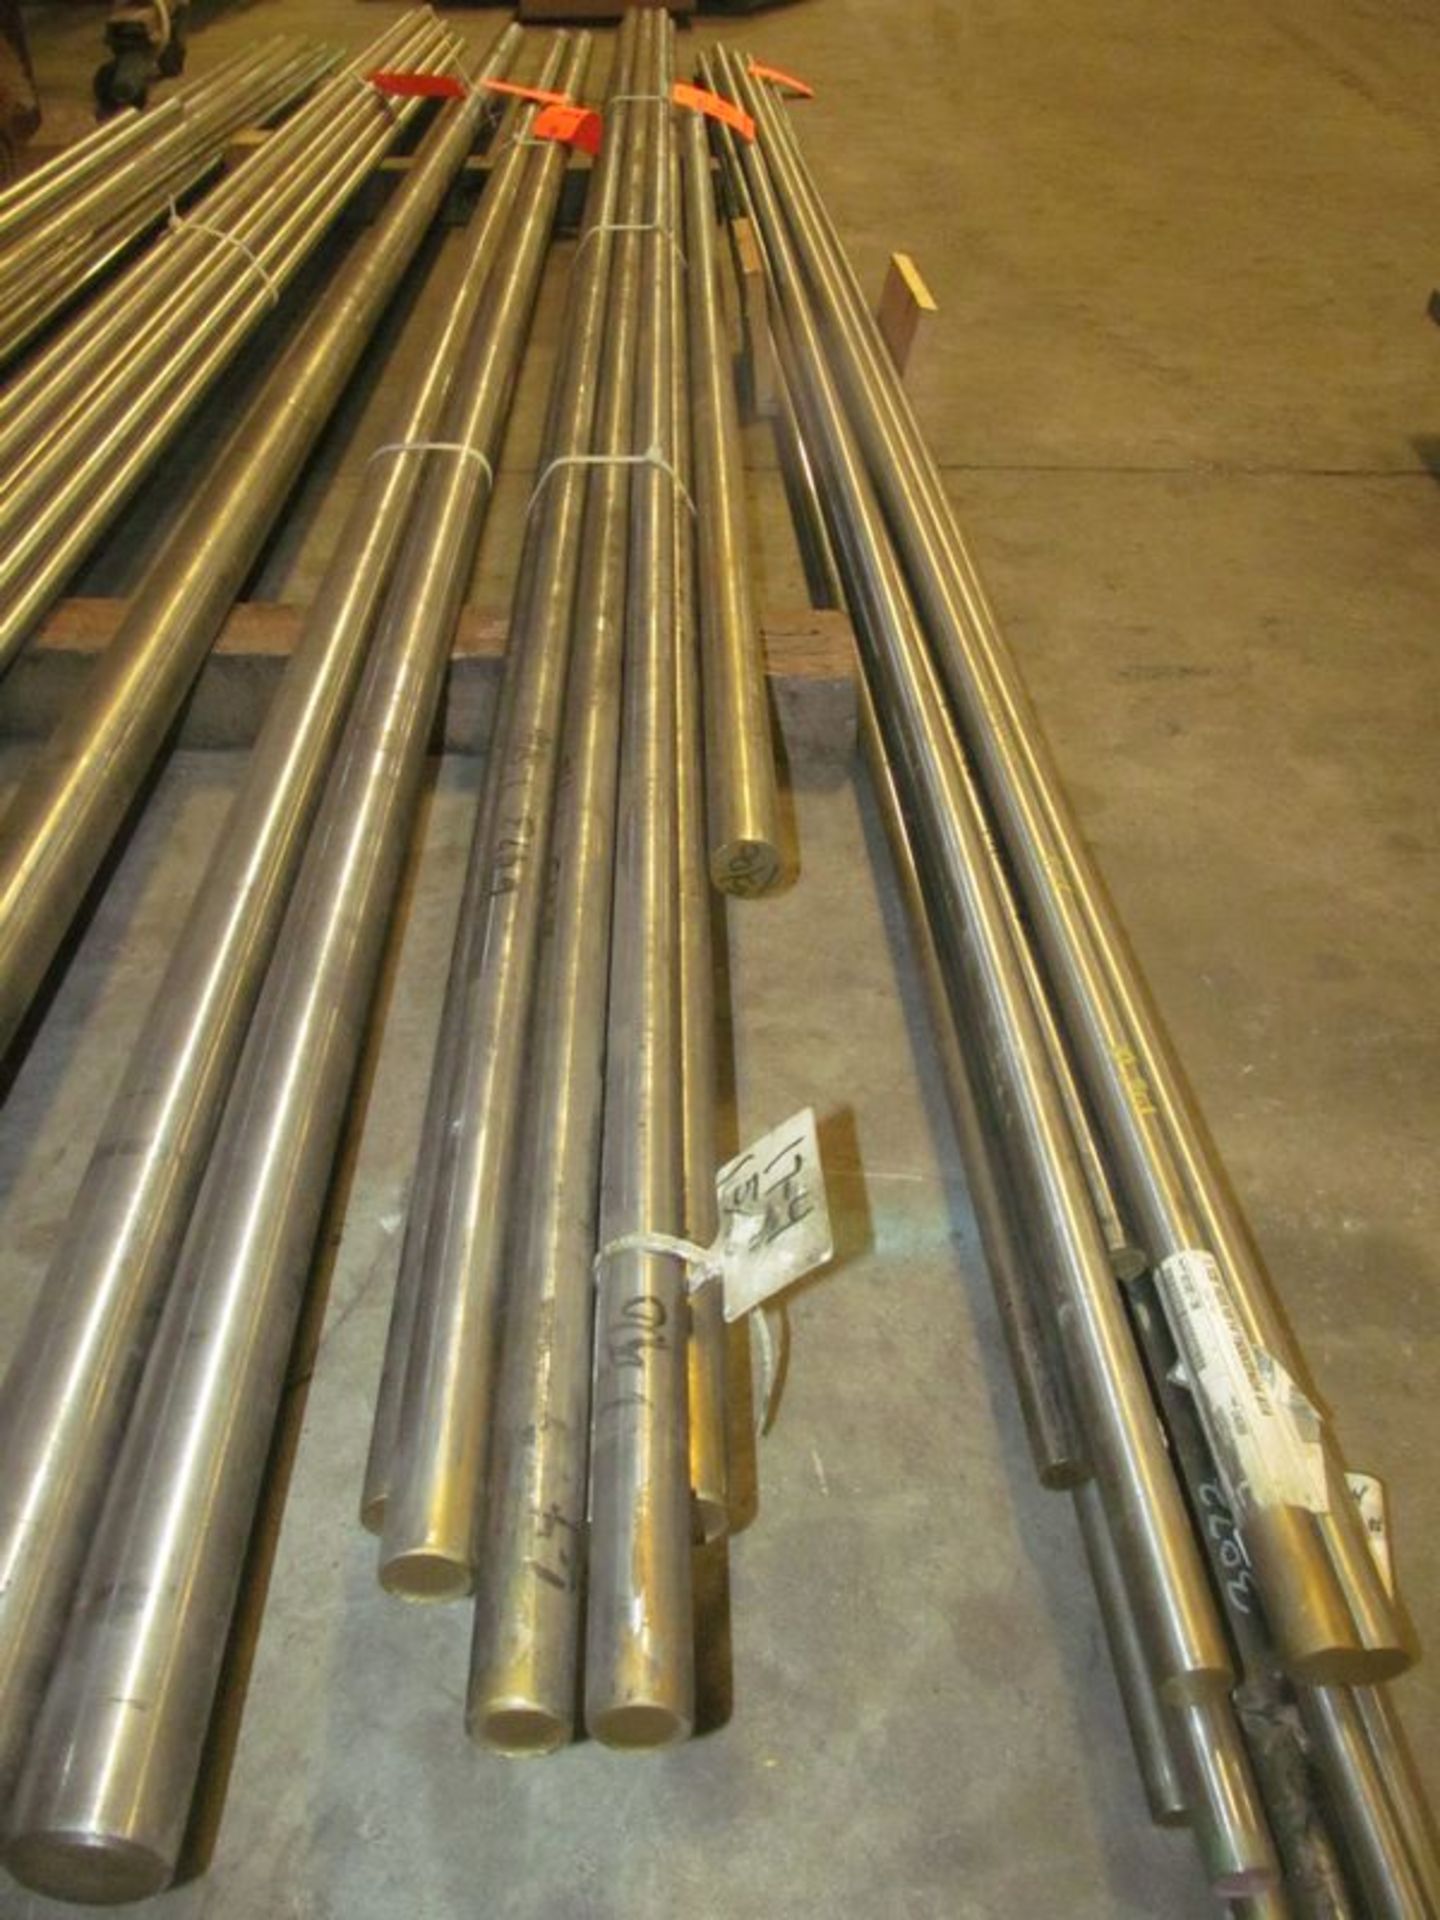 Lot of (8) pieces Stainless Steel grade 17-4, 1 15/16" diameter x length (blg 2 rack 8 floor)